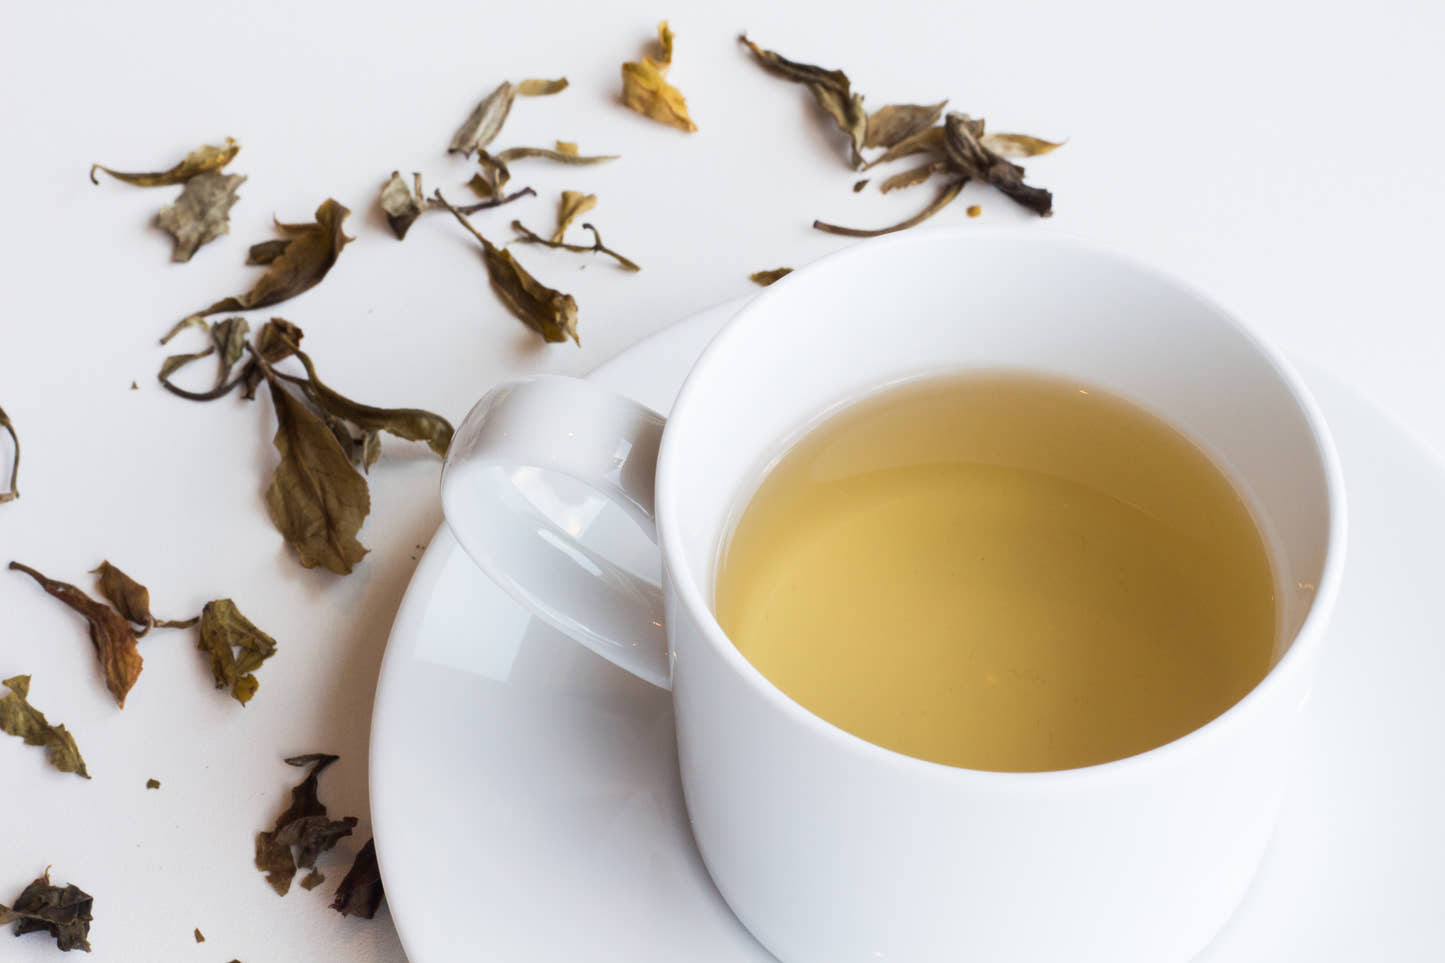 Organic Bai Mudan White Tea